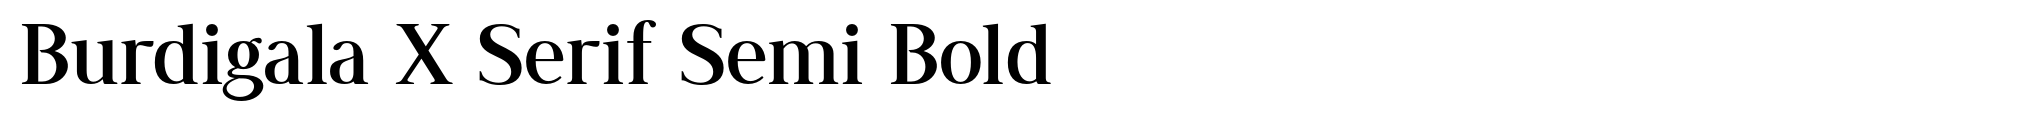 Burdigala X Serif Semi Bold image